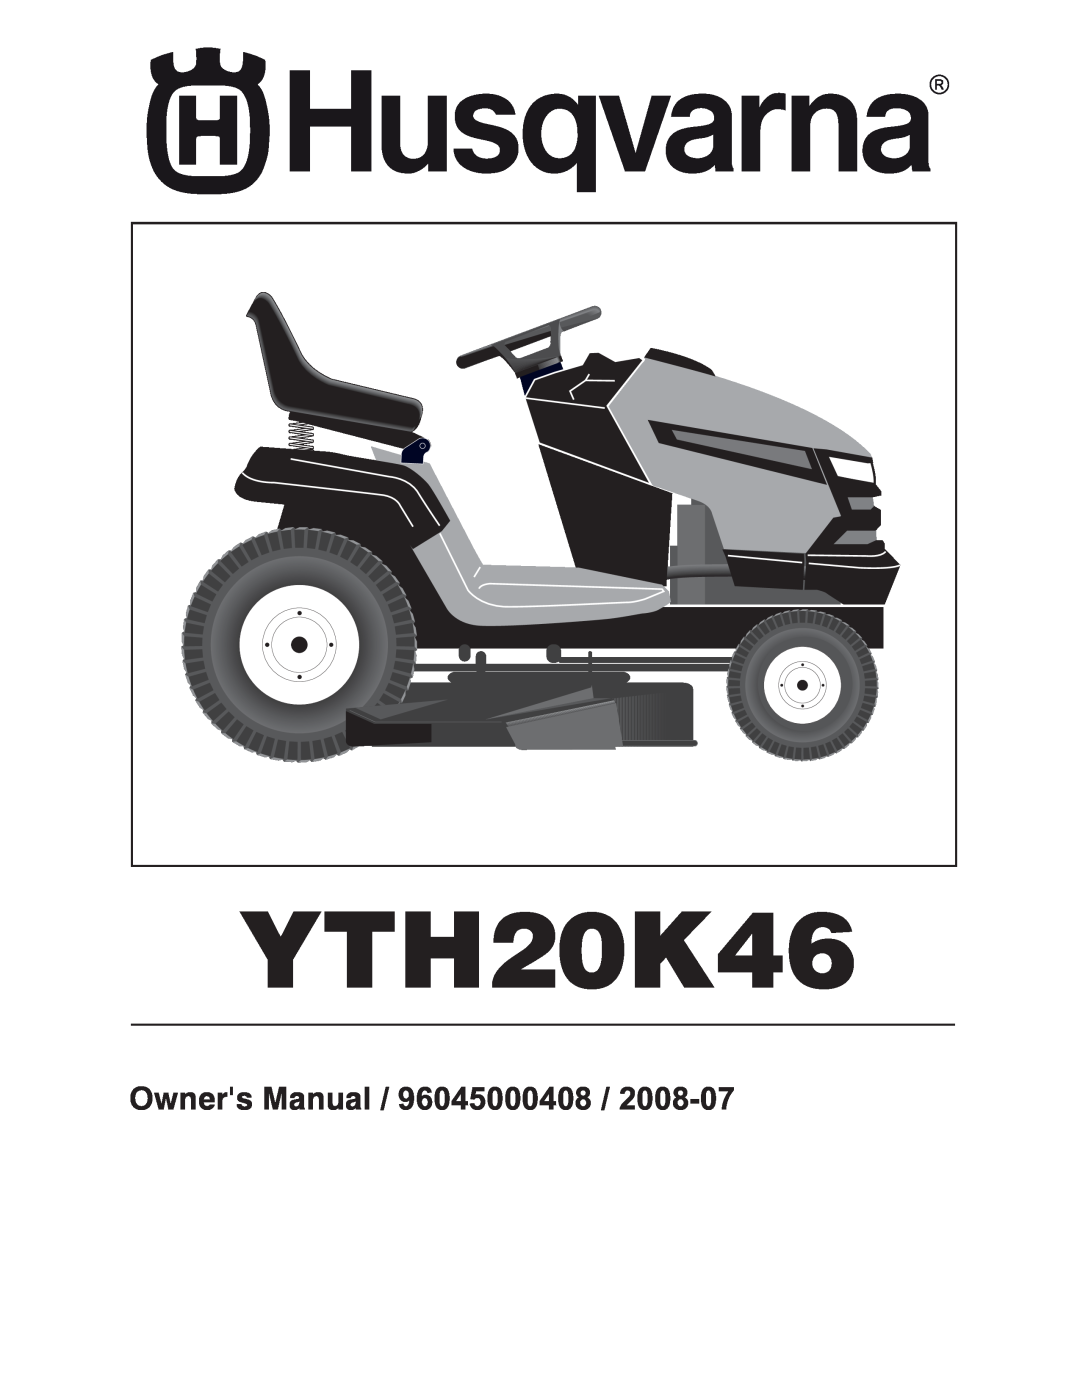 Husqvarna 532 42 20-50_R1 owner manual YTH20K46, Owners Manual / 96045000408 